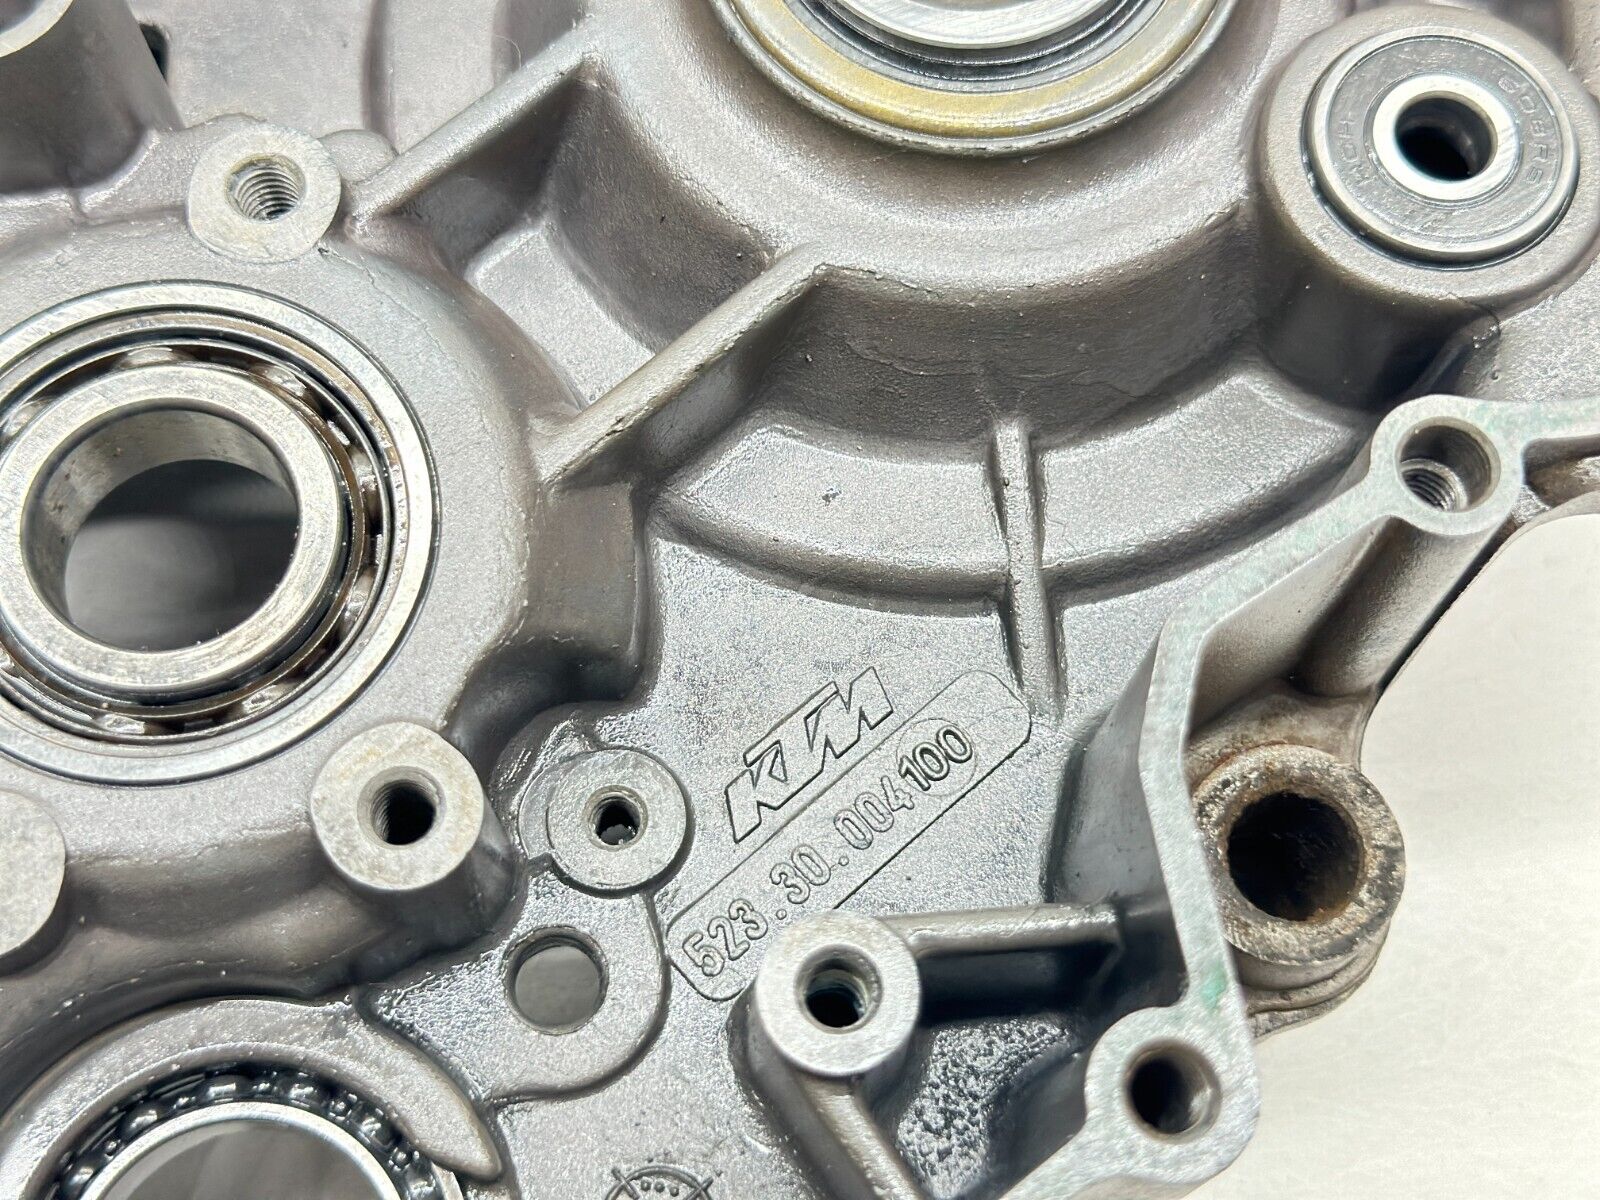 2011 KTM 150SX Right Side Engine Crankcase Bottom End Motor OEM Half Case 150 SX